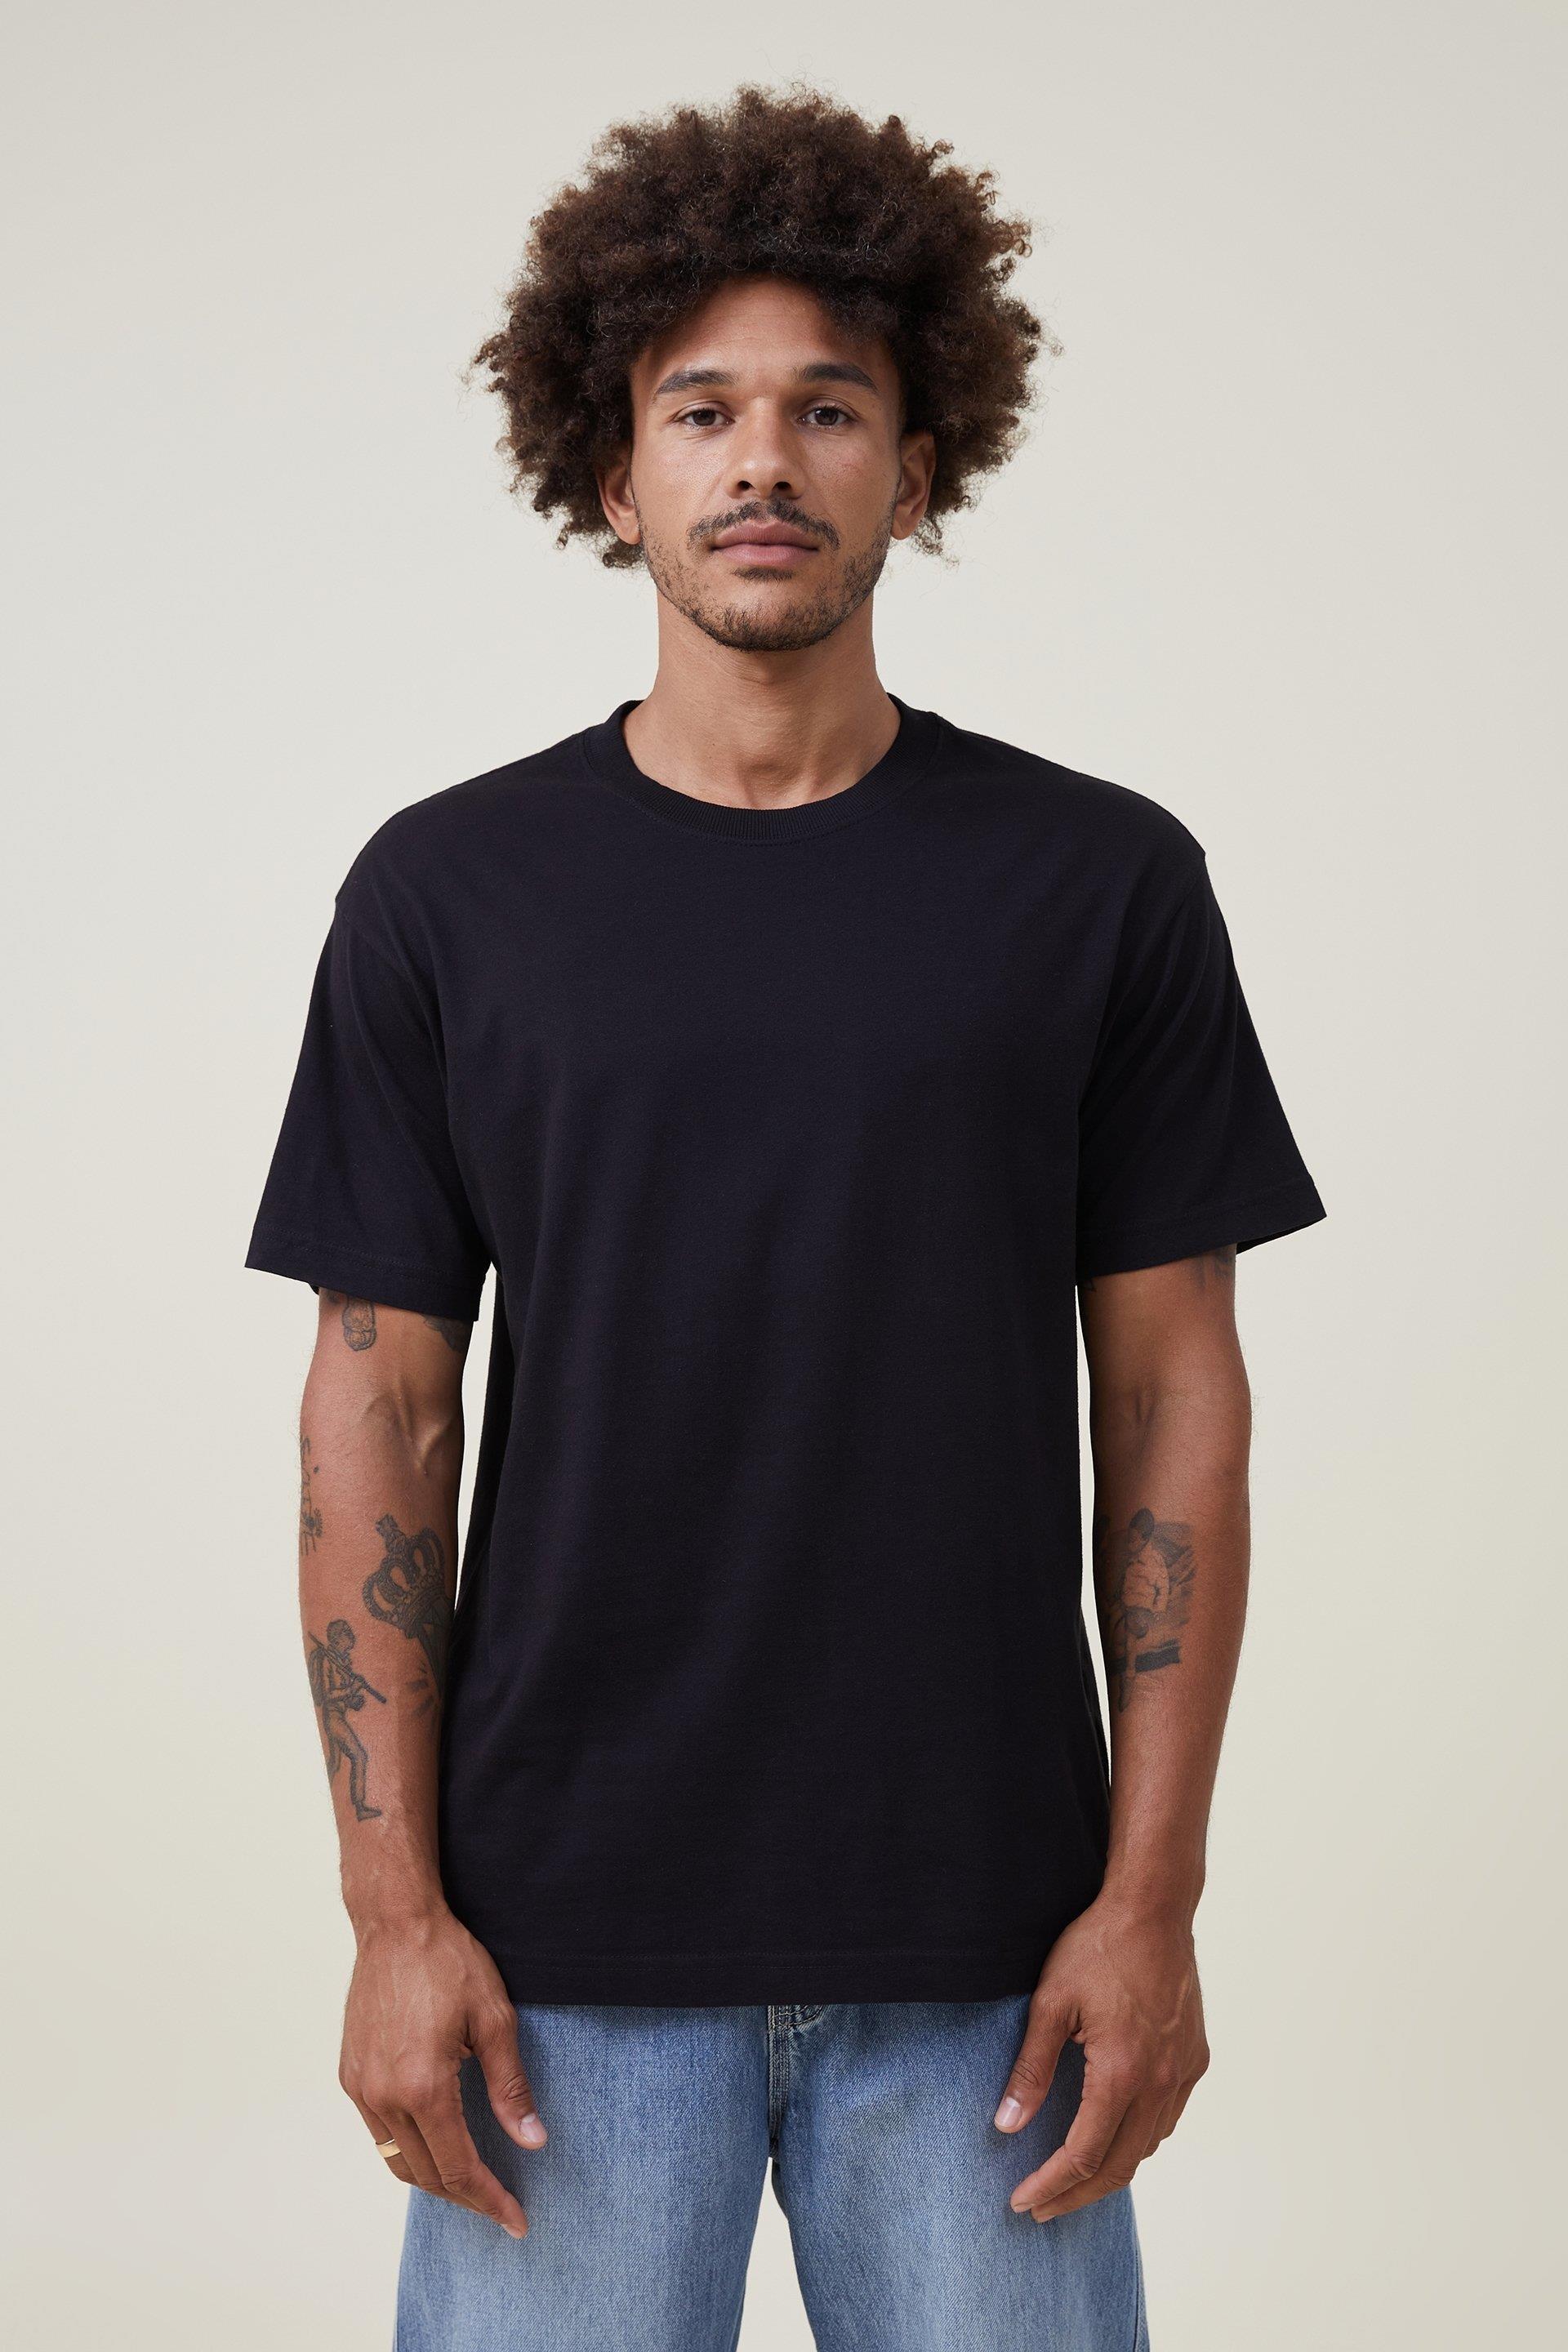 Cotton On Men - Organic Loose Fit T-Shirt - Black